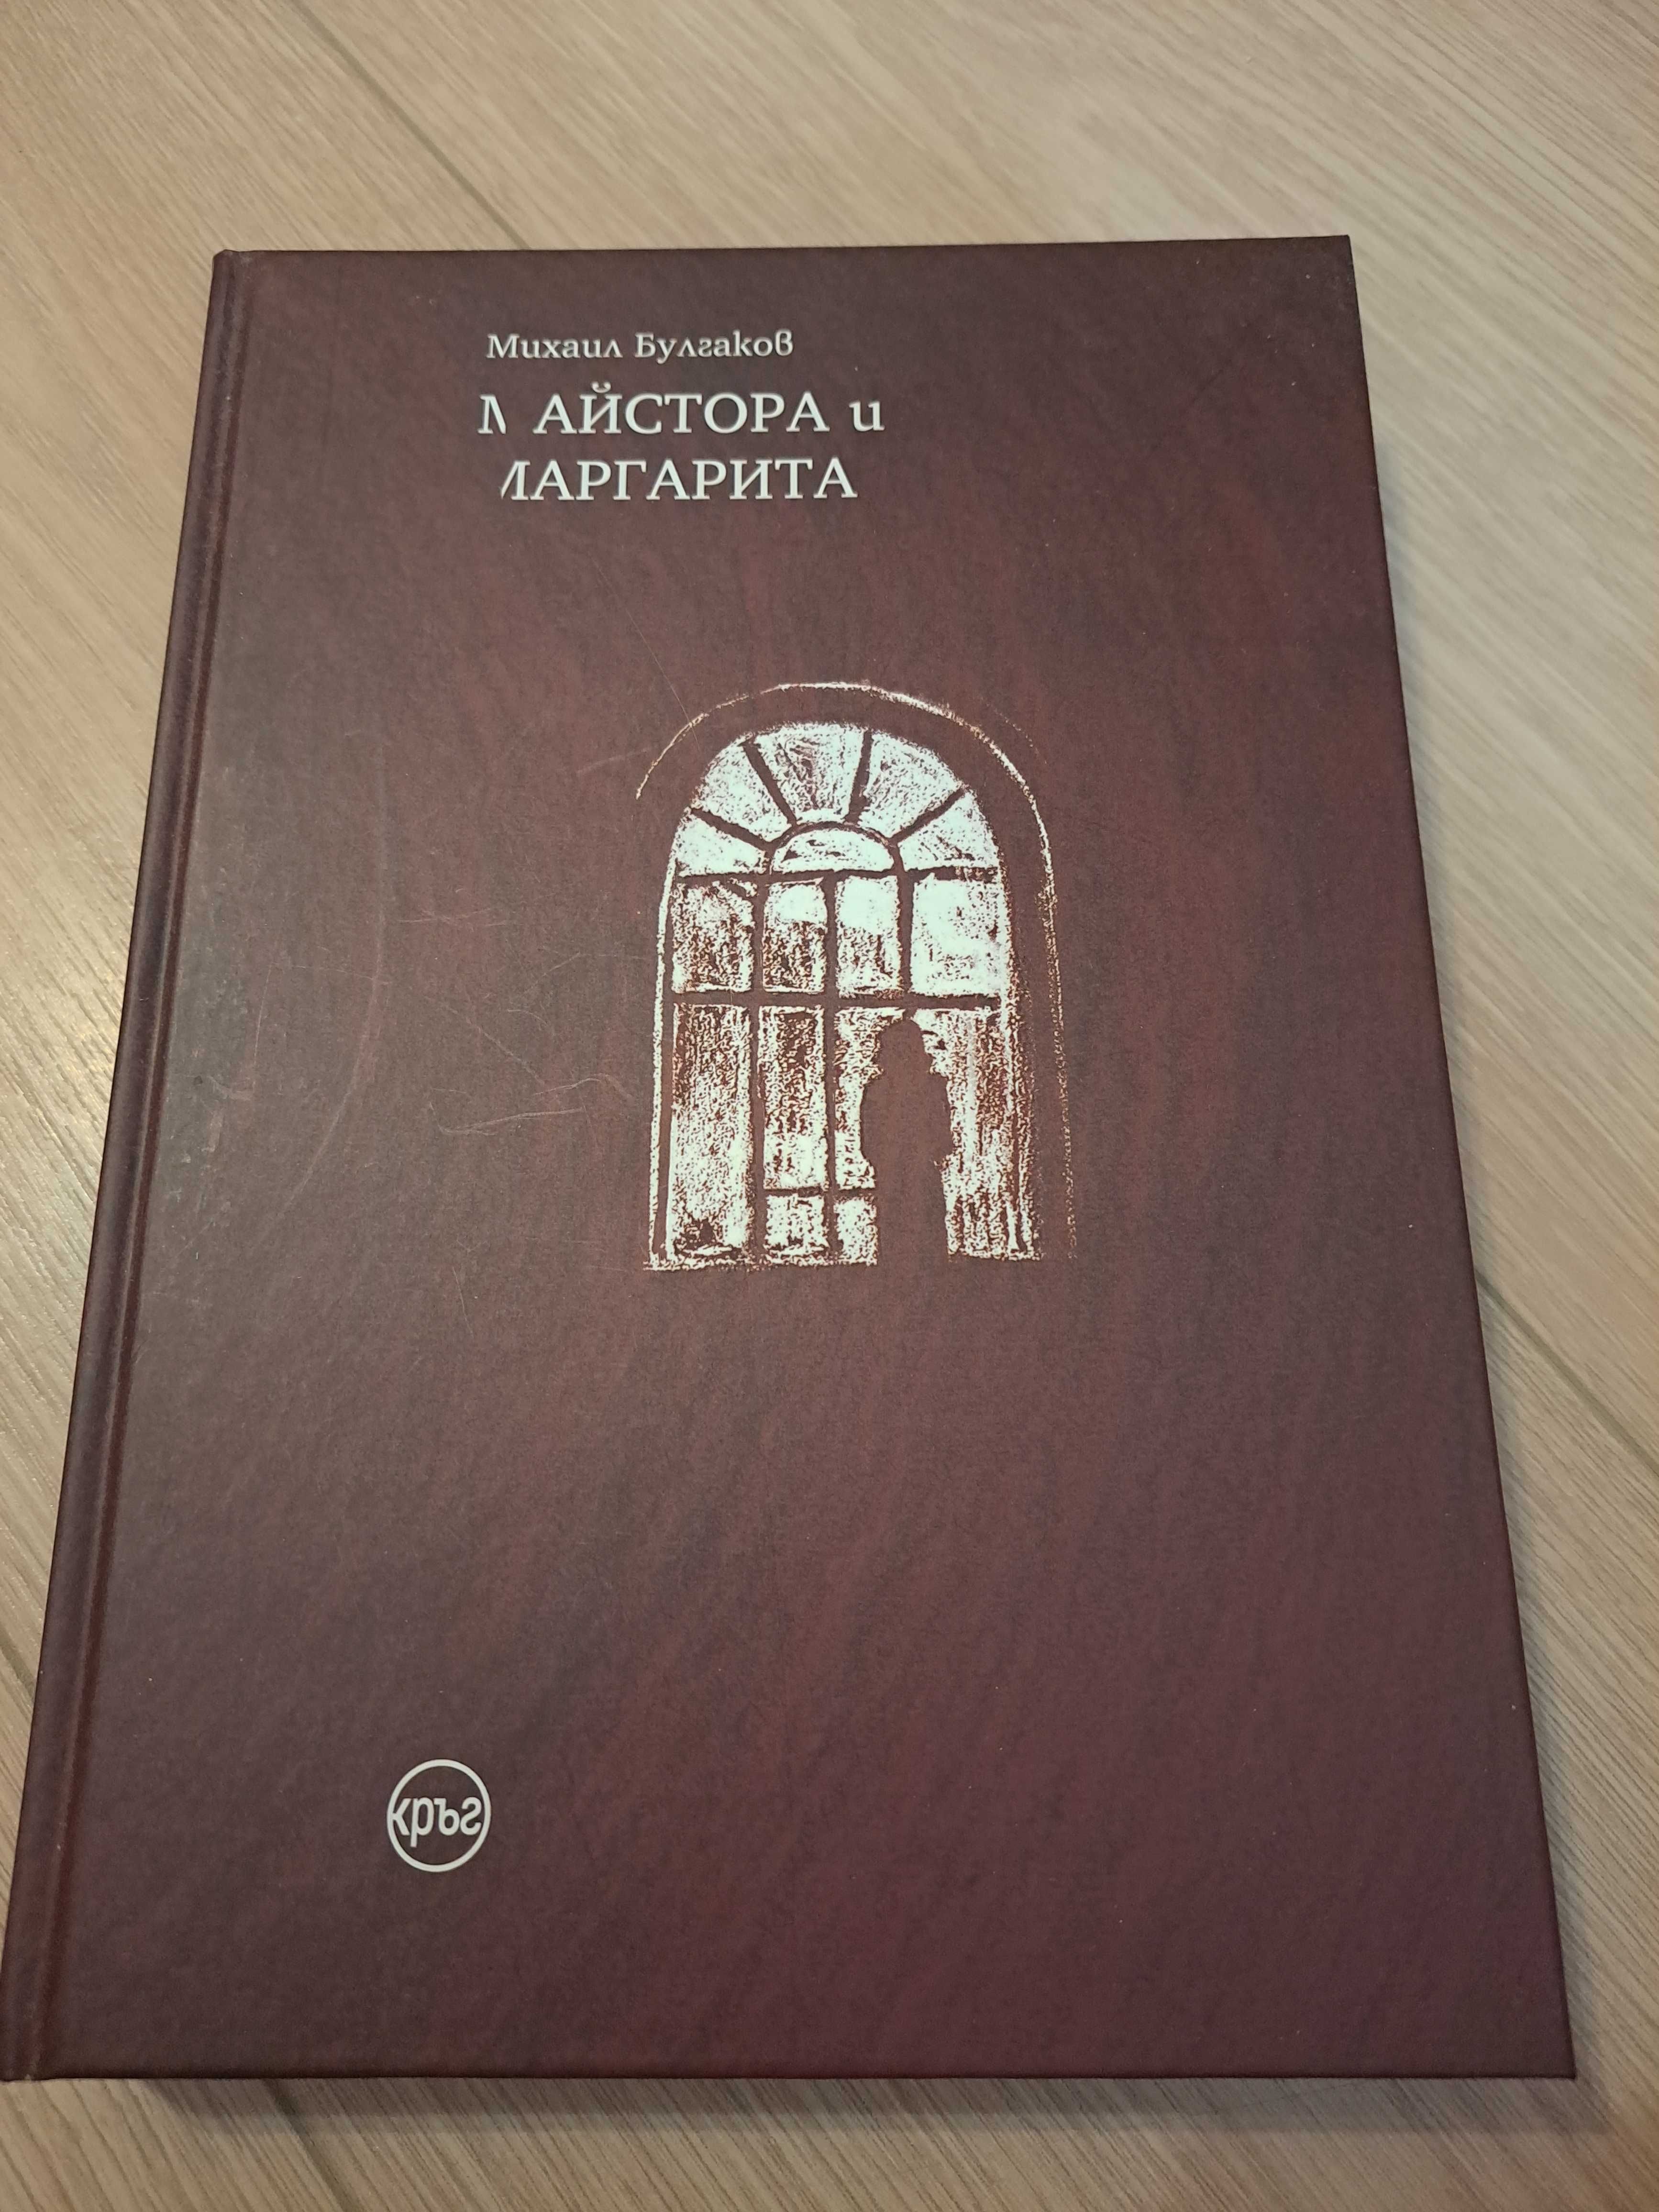 Нова книга Майстора и Мартарита Михаил Булгаков